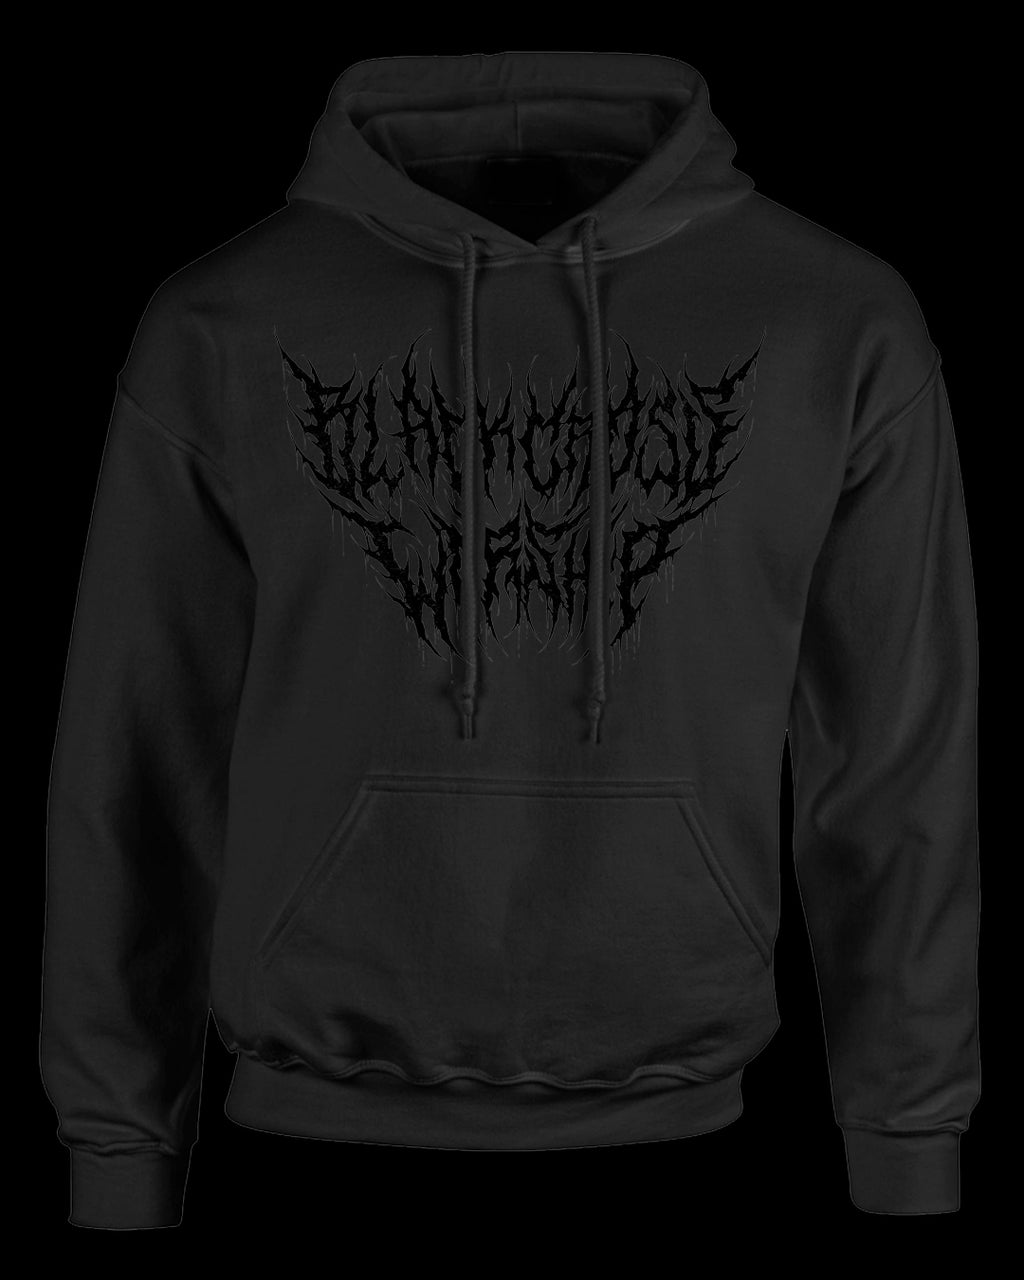 stealth black cross worship brutal text pullover hoodie (black on black)